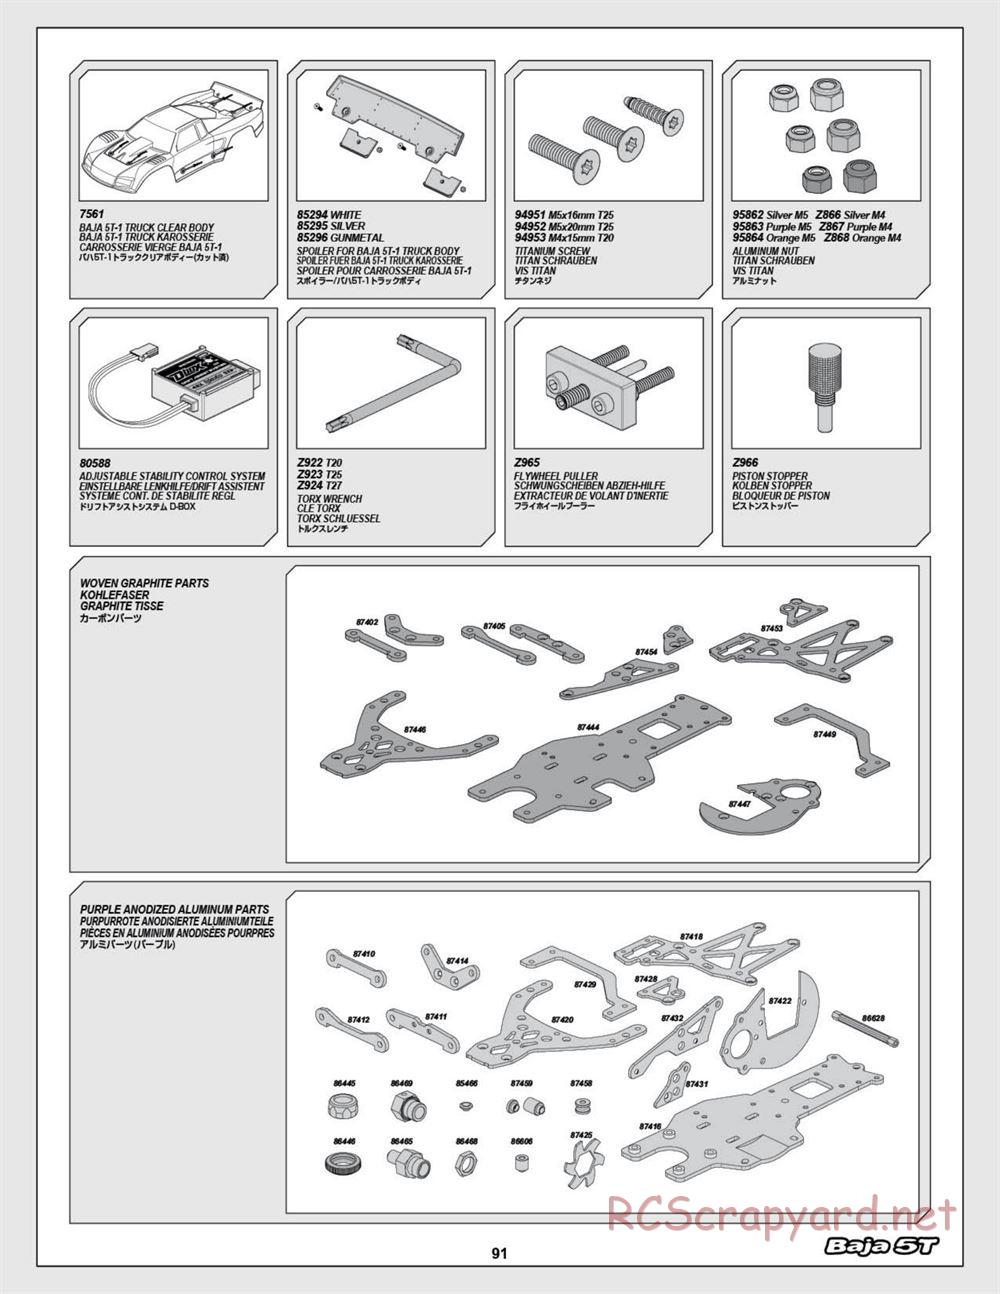 HPI - Baja 5T (2008) - Manual - Page 91